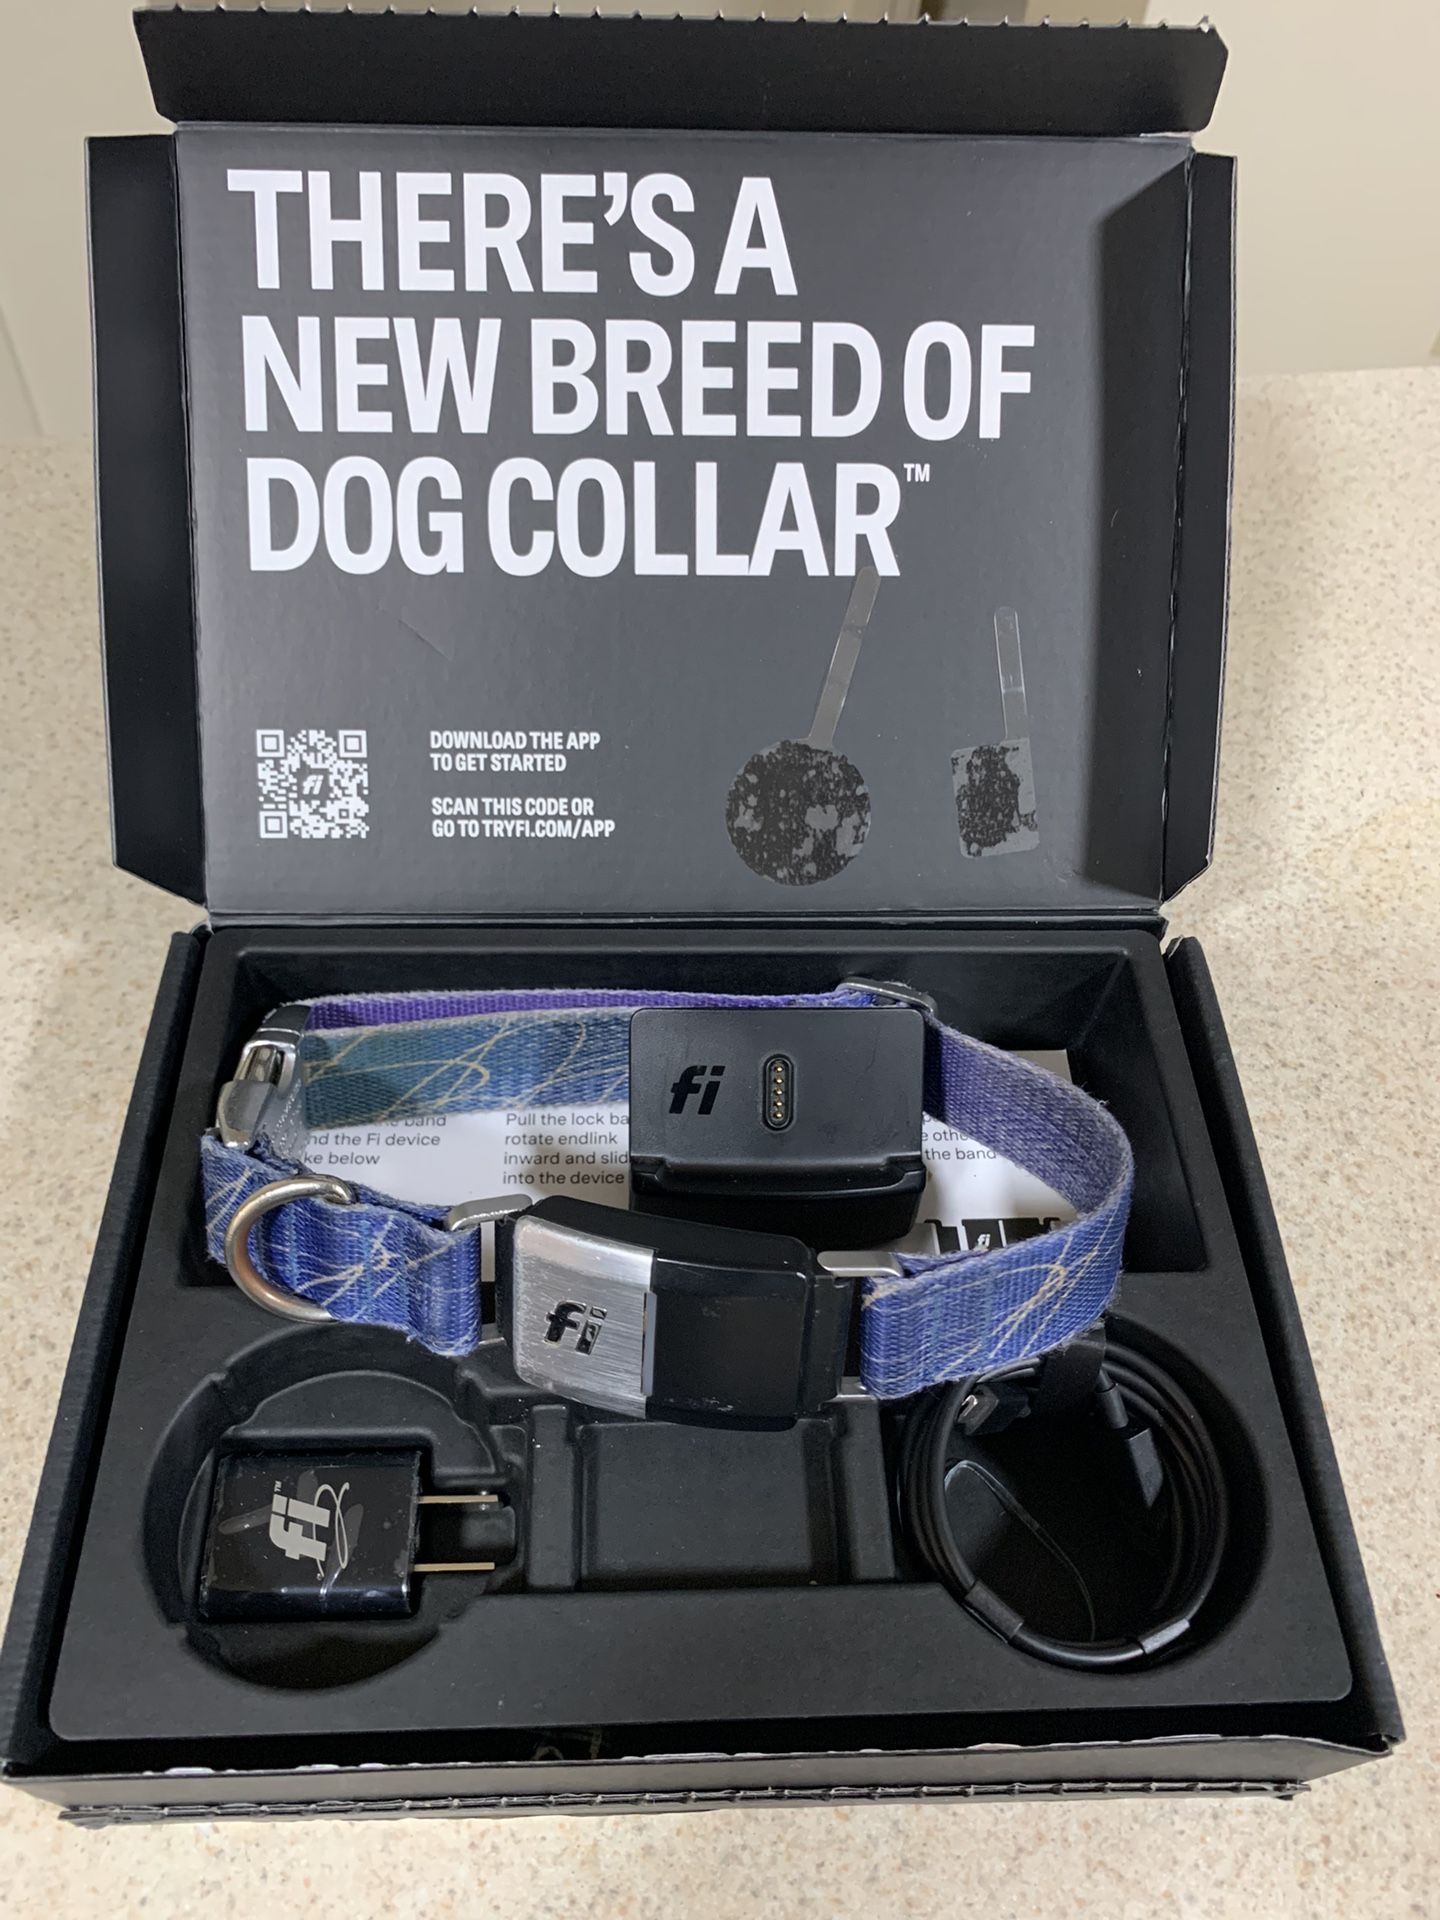 Fi Series 2 GPS Trackertt Smart Dog Collar